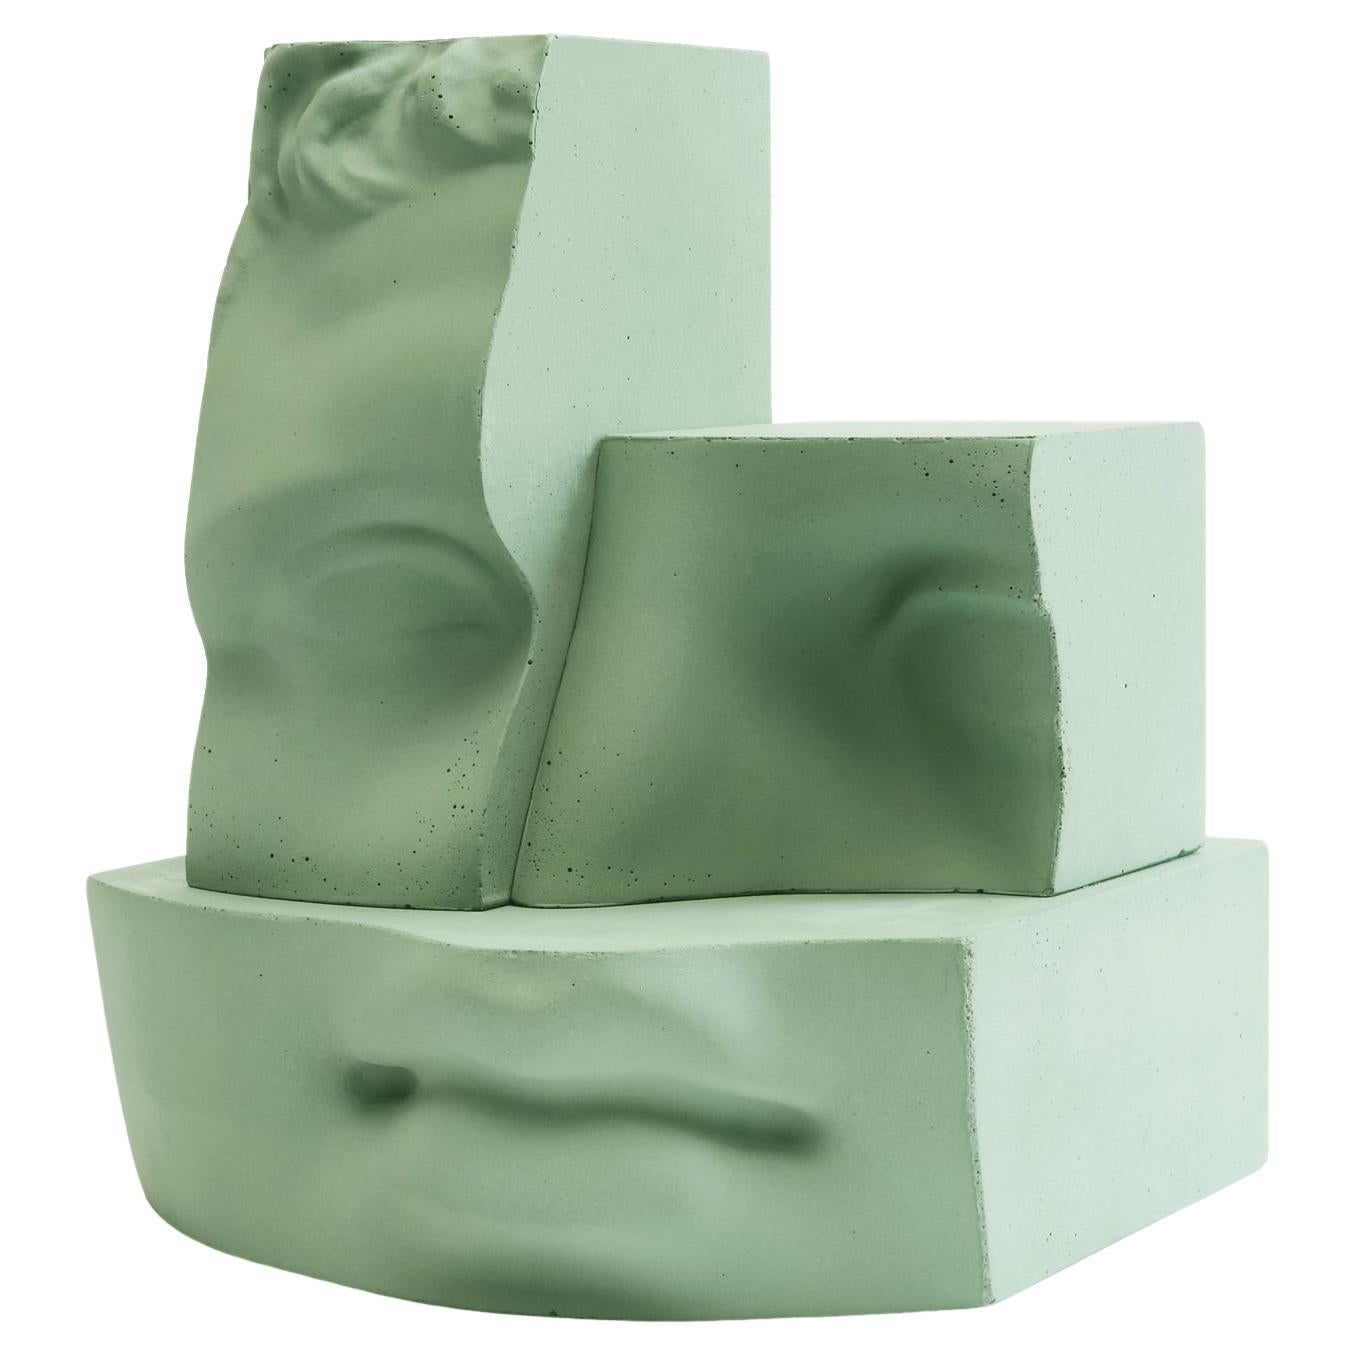 Hermes - Mint Green - Design Sculpture Paolo Giordano Concrete Cement Cast For Sale